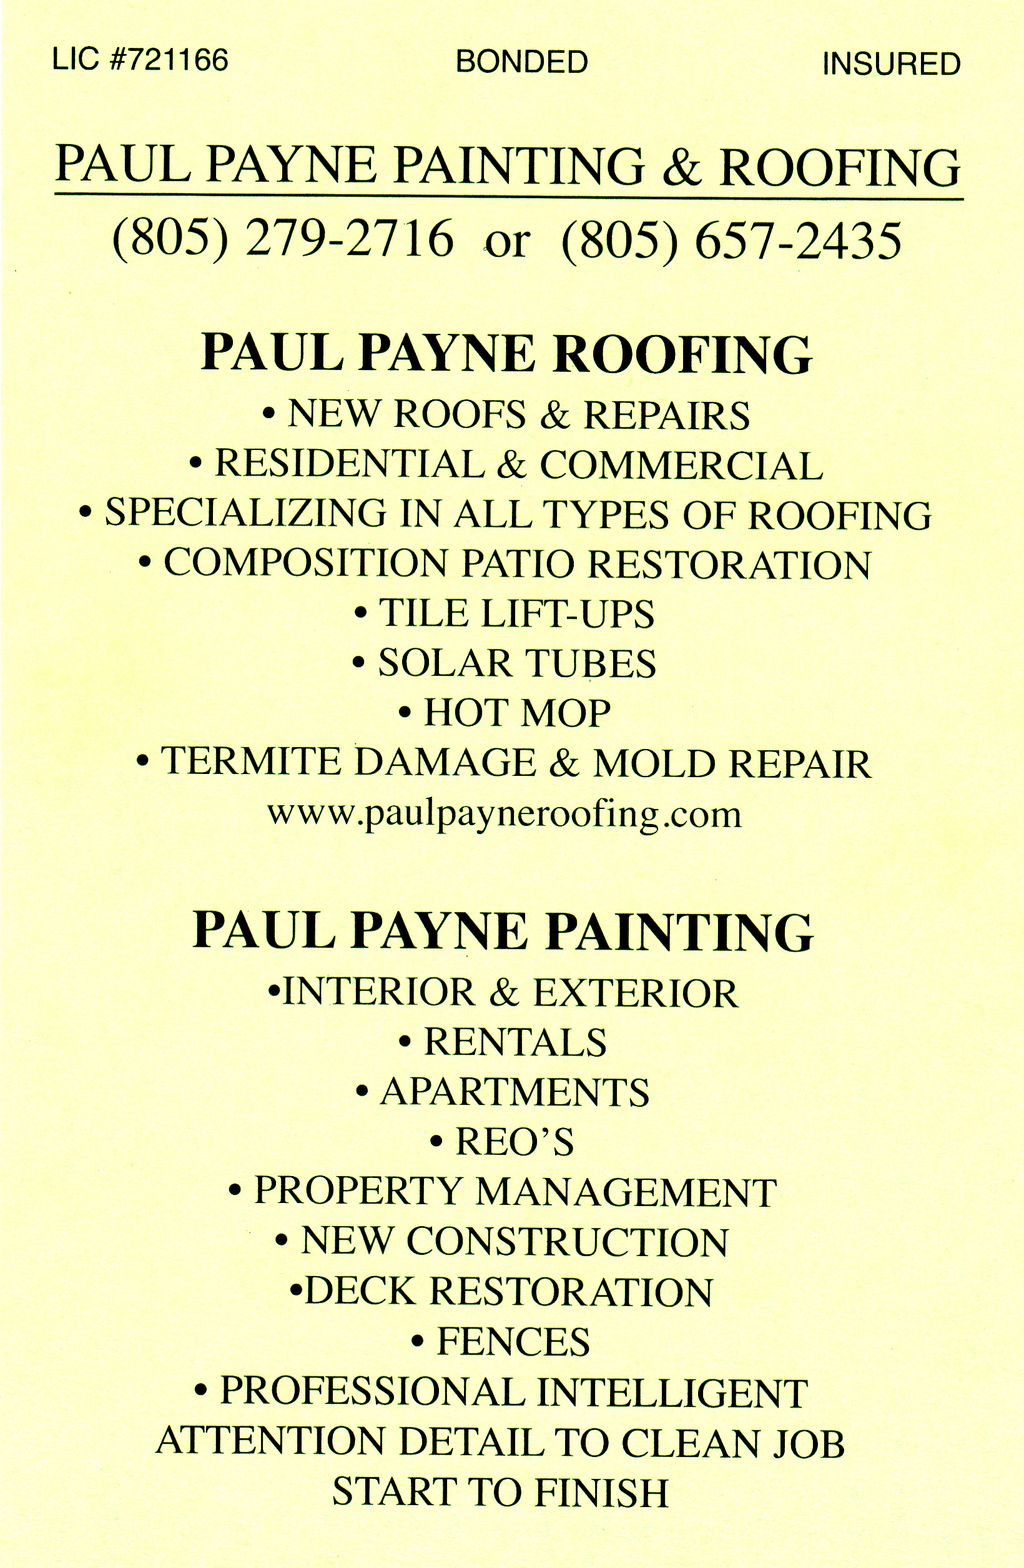 Paul Payne Roofing